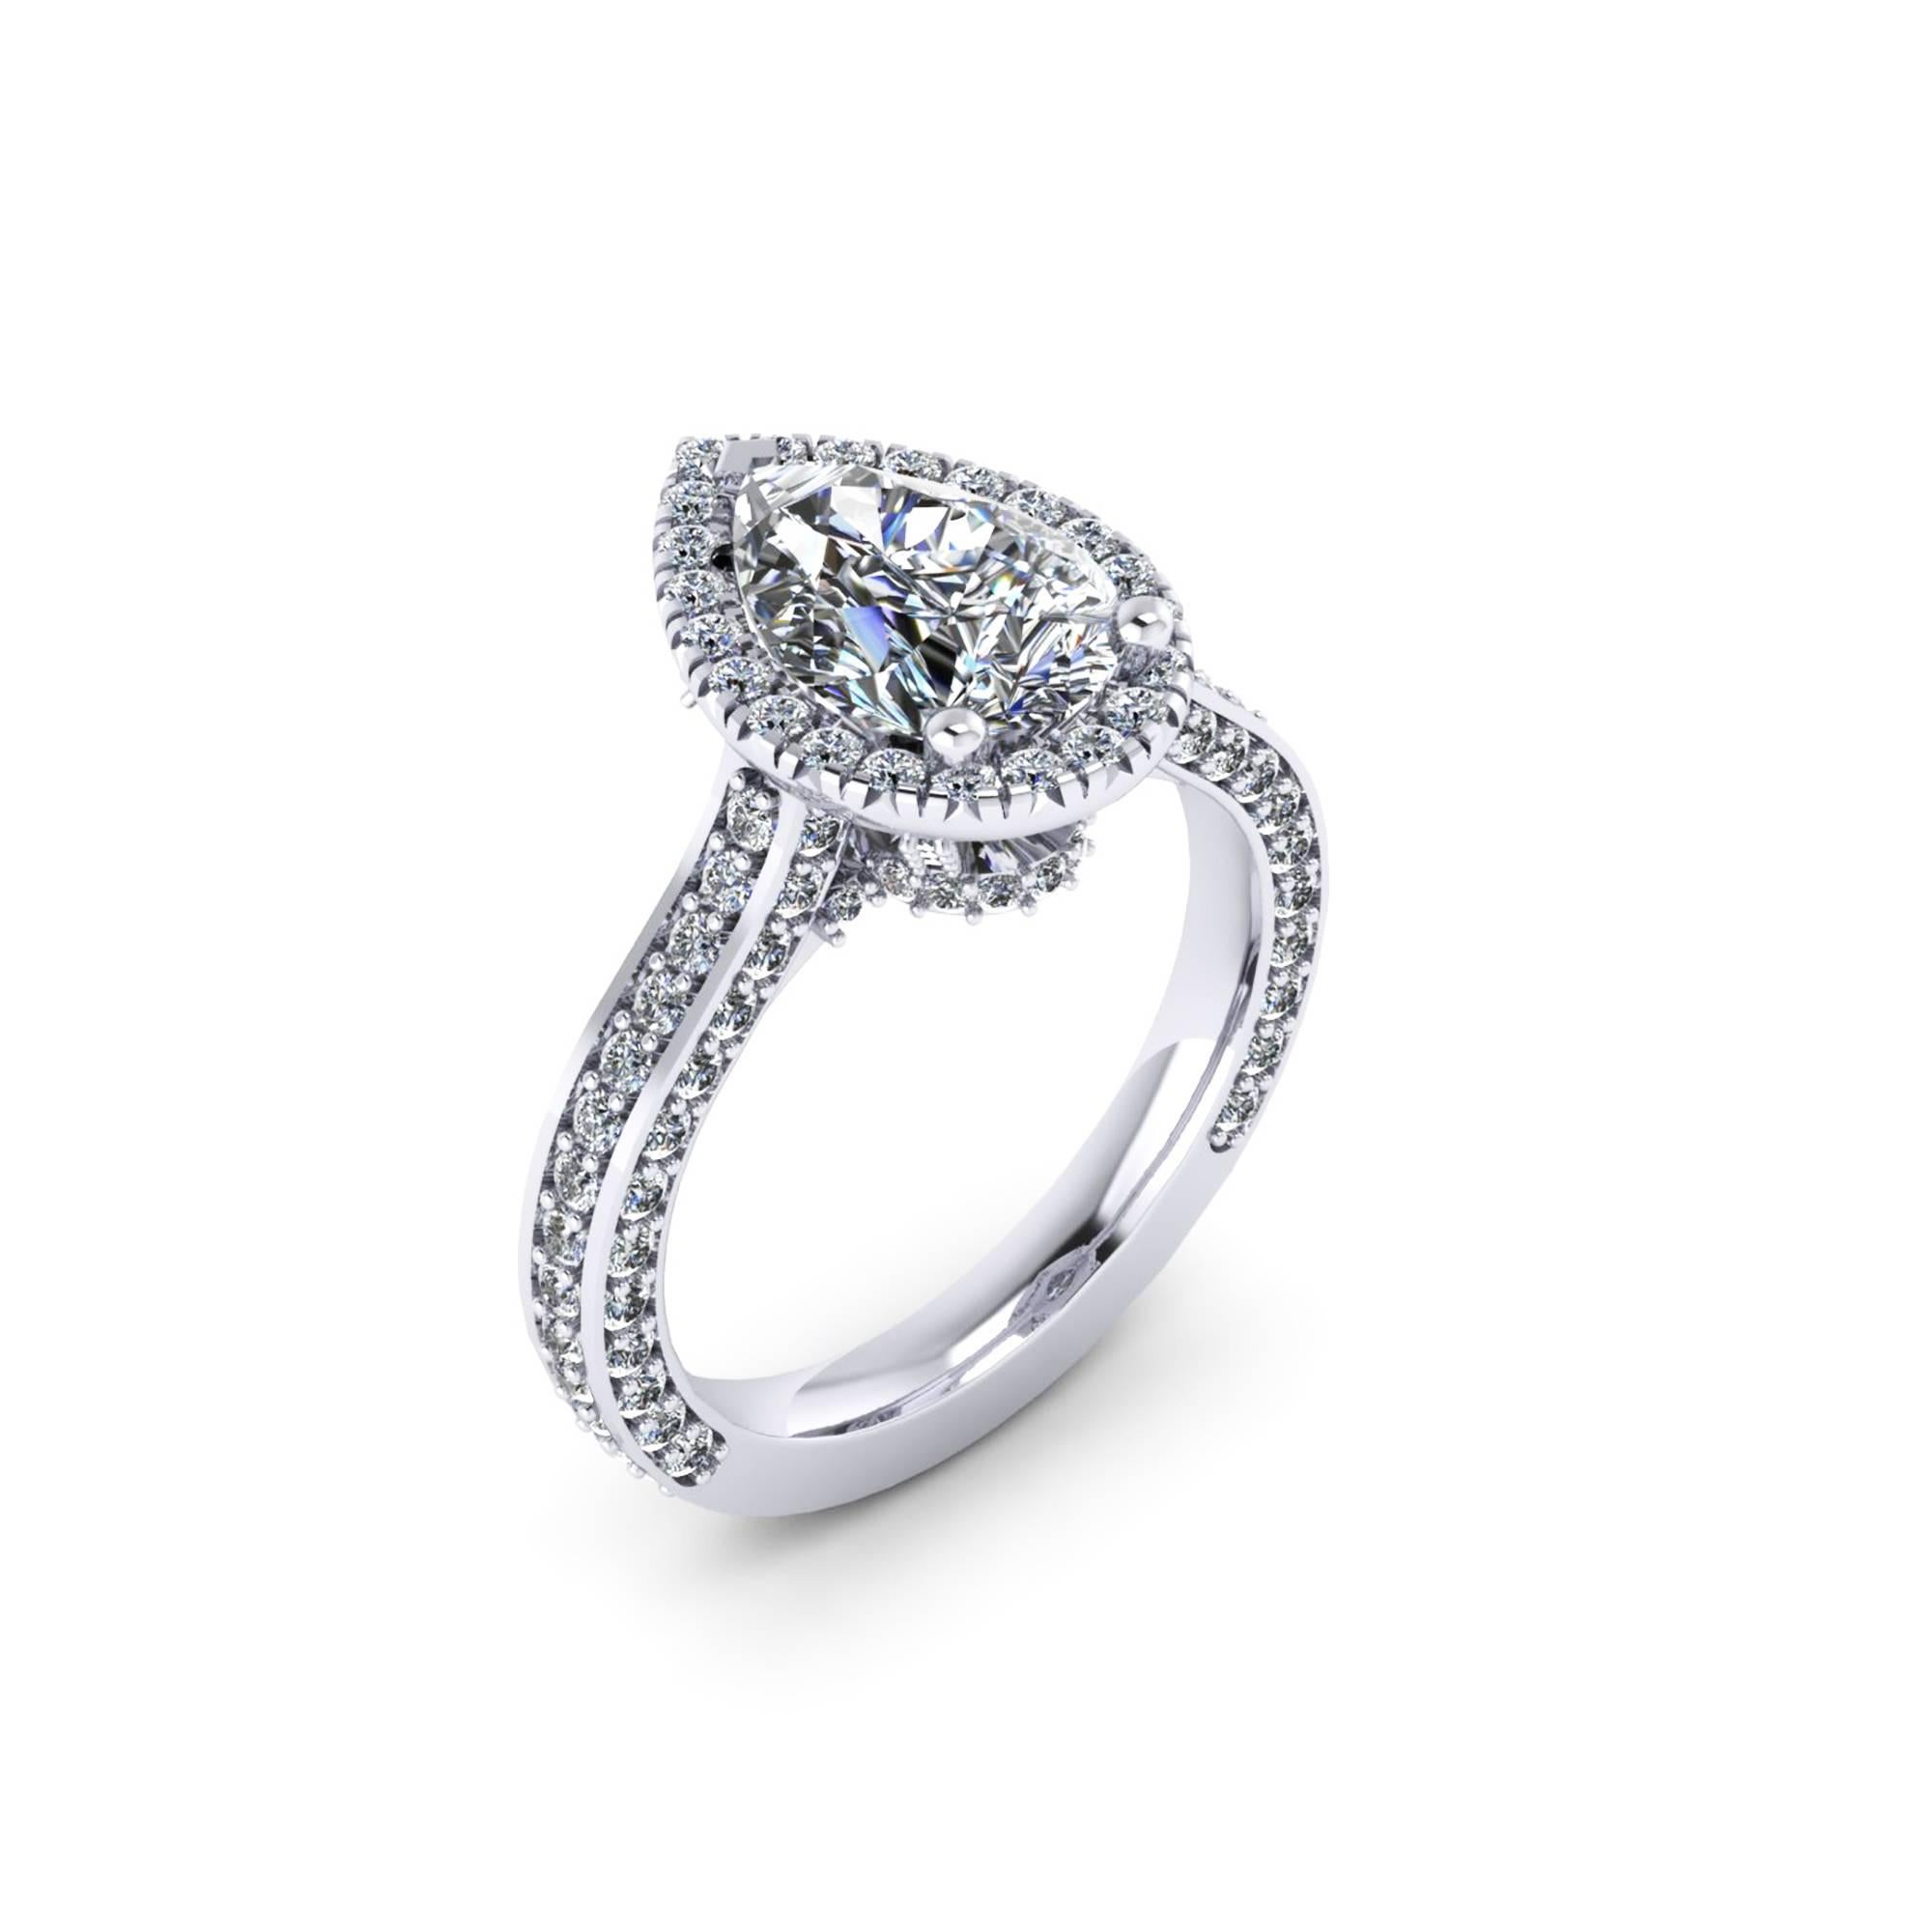 Romantic Ferrucci GIA Certified 1.90 Carat D Color Pear Shape Diamond Engagement Ring